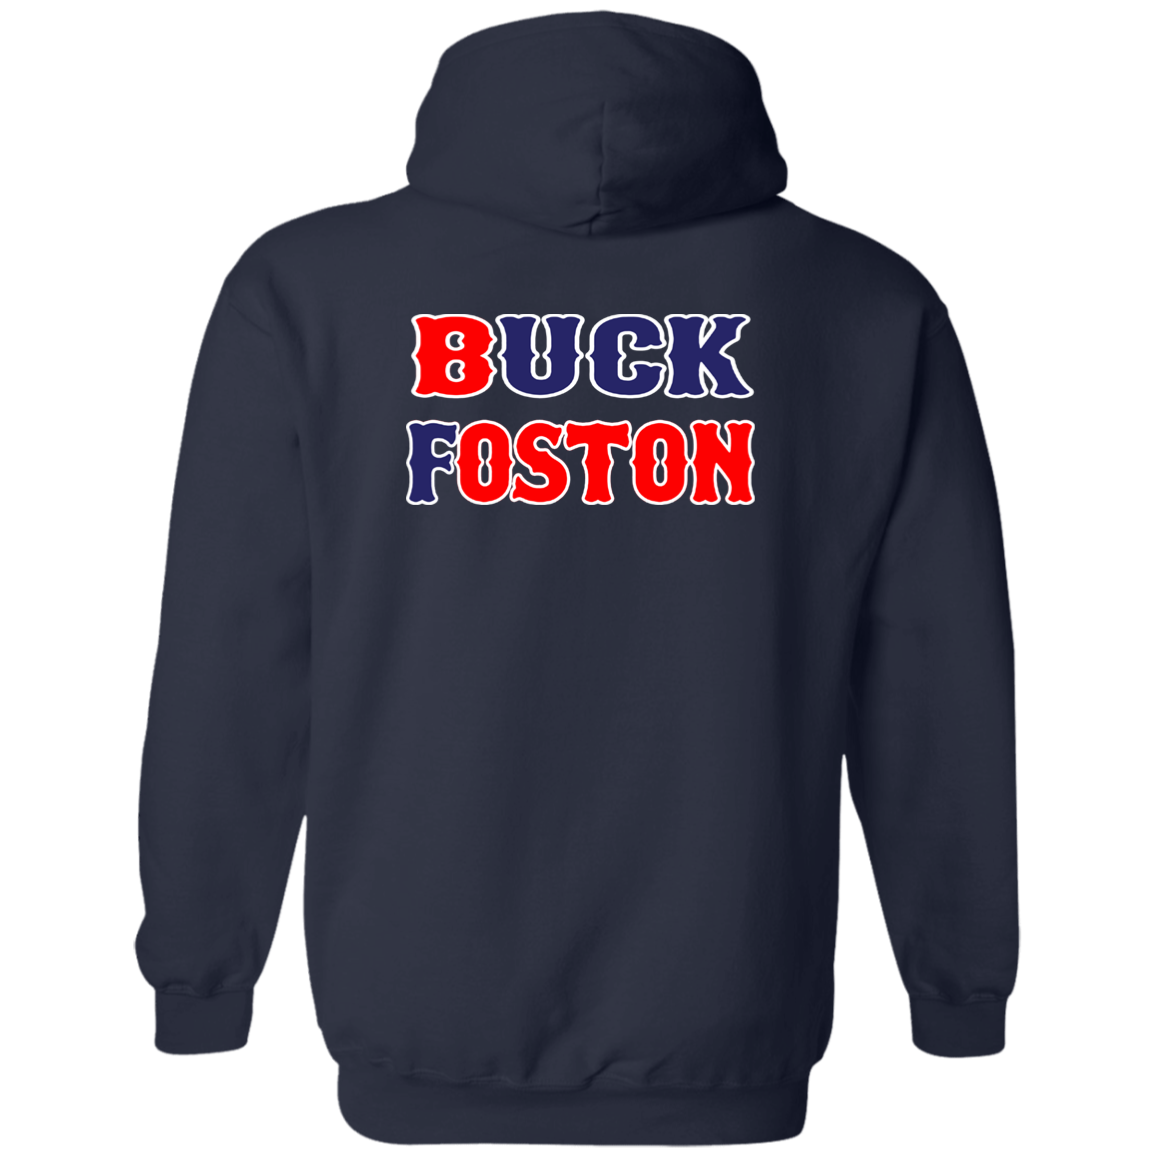 ArtichokeUSA Custom Design. BUCK FOSTON. Zip Up Hooded Sweatshirt